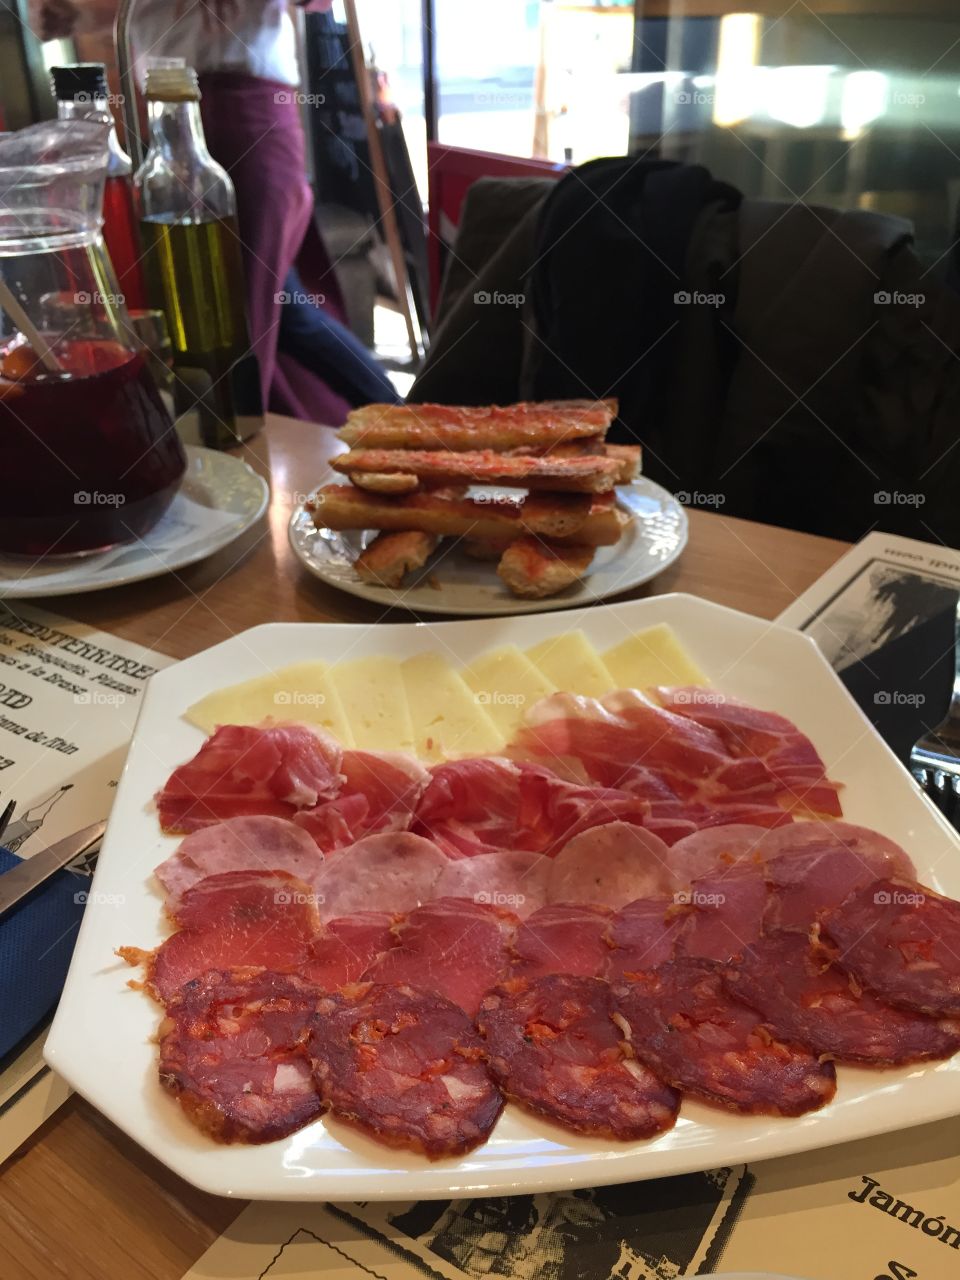 Sharing Food in Barcelona